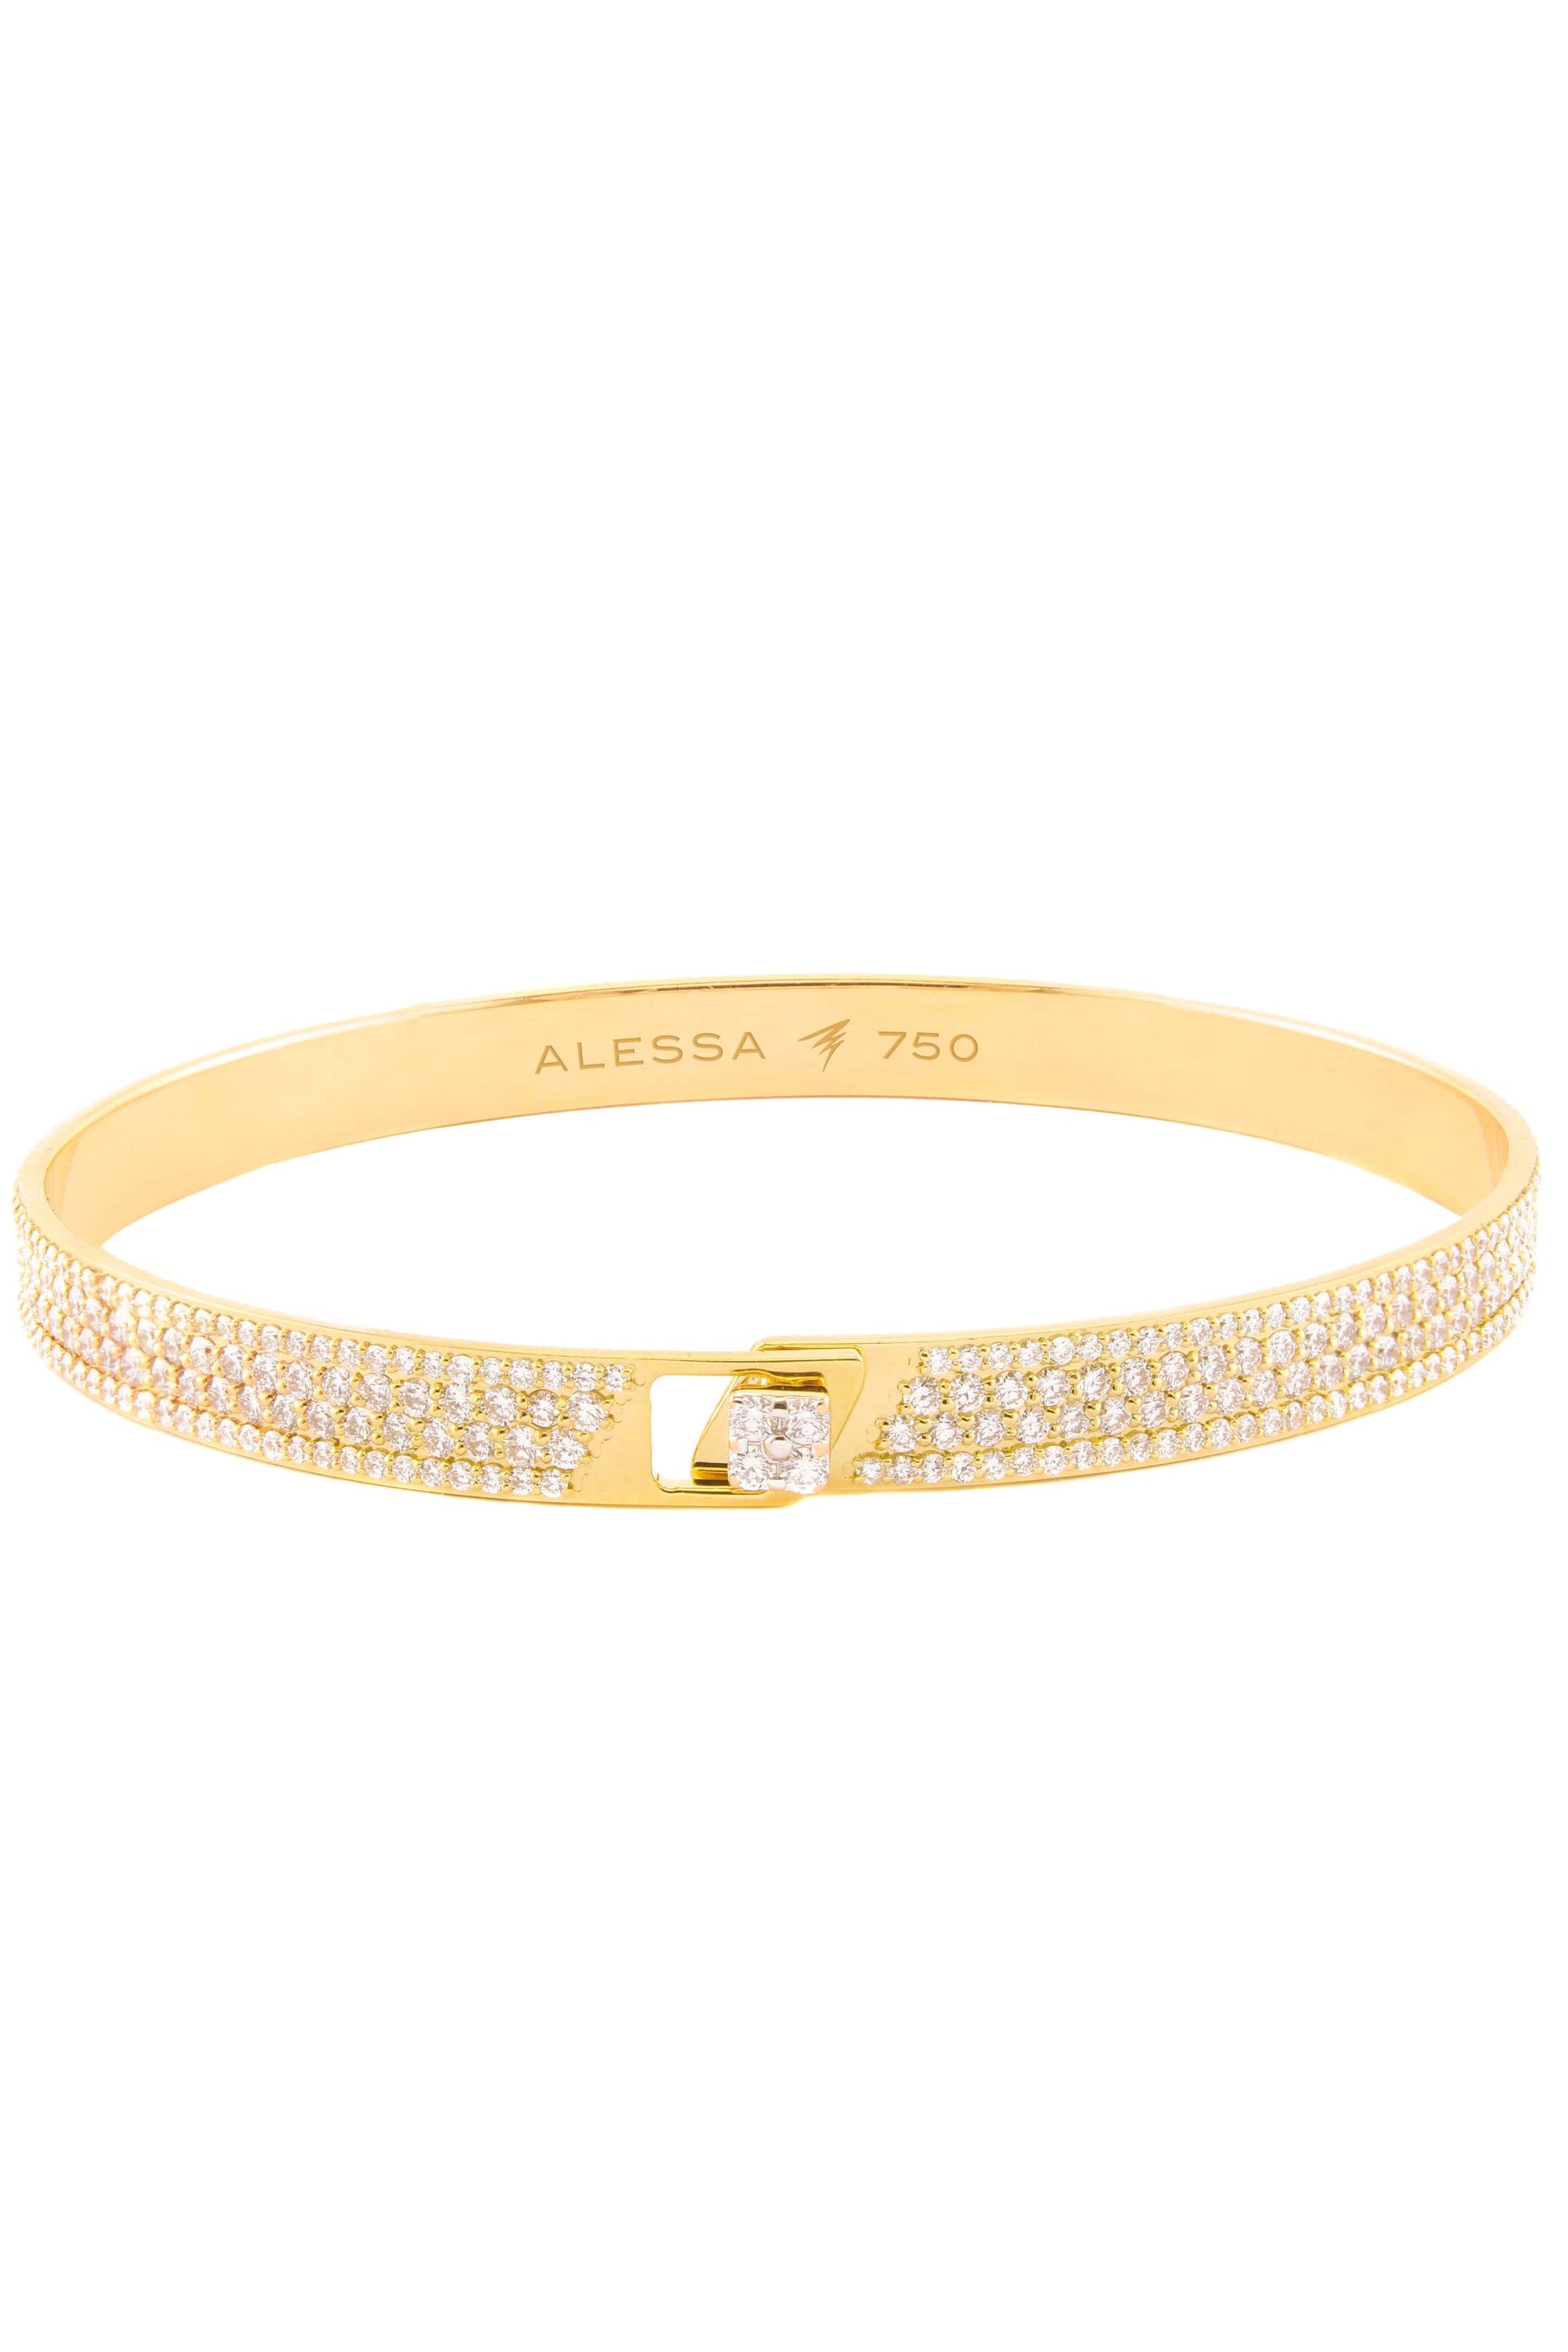 ALESSA JEWELRY-Spectrum Full Pave Bracelet-YELLOW GOLD